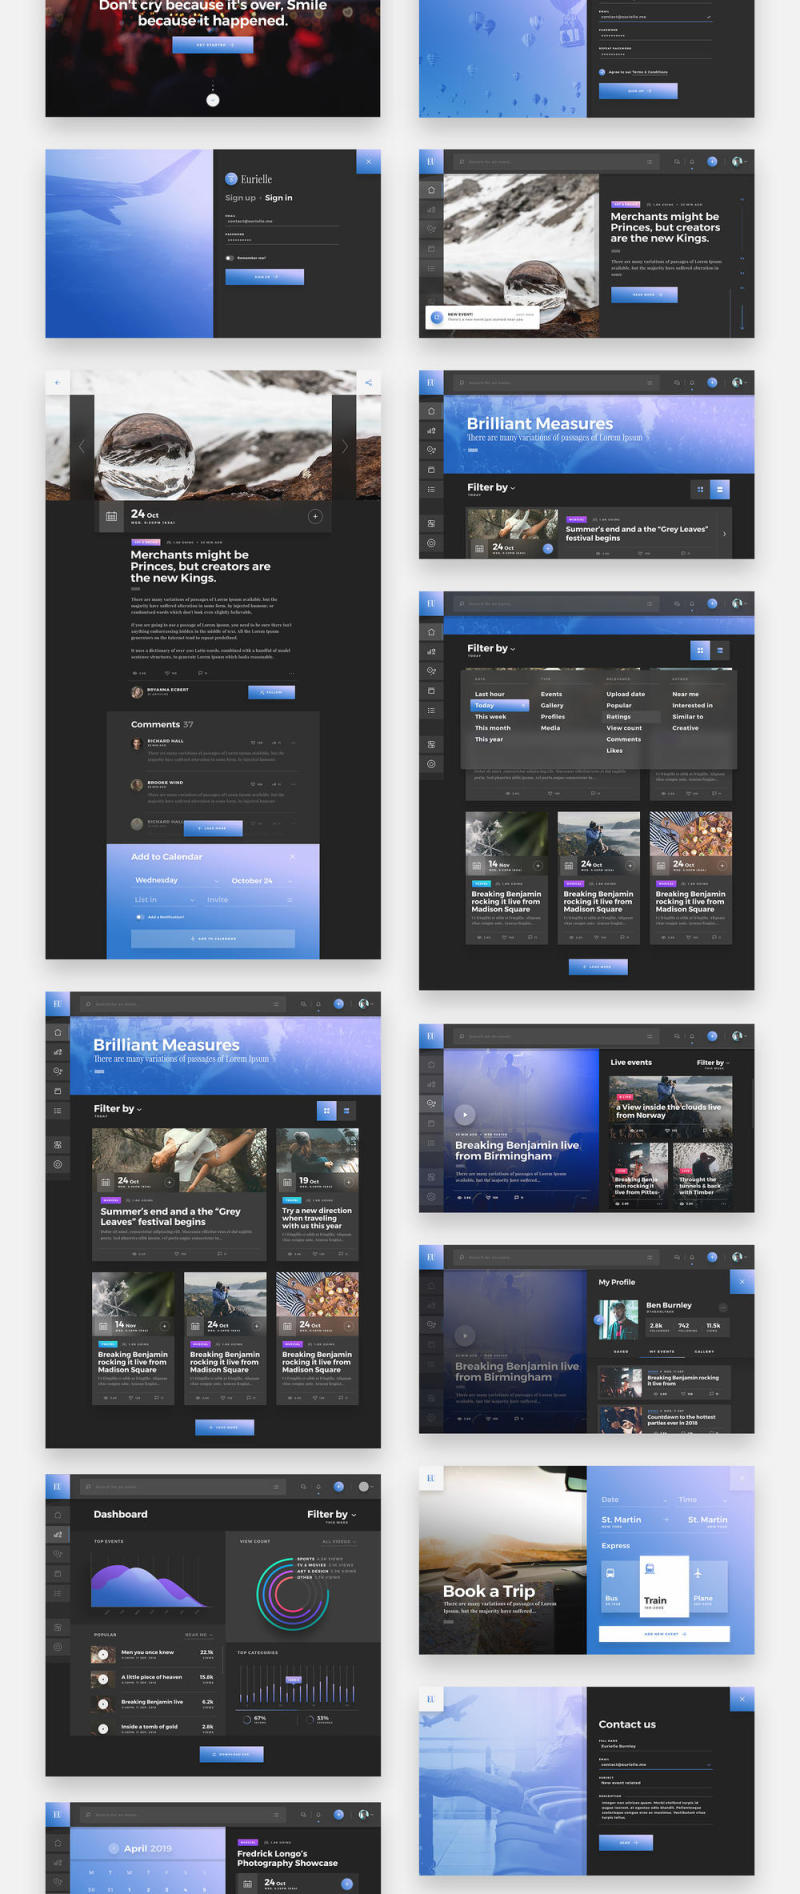 Web事件和博客App UI Kit - 用于Sketch，Photoshop，XD，Eurielle Web App UI Kit